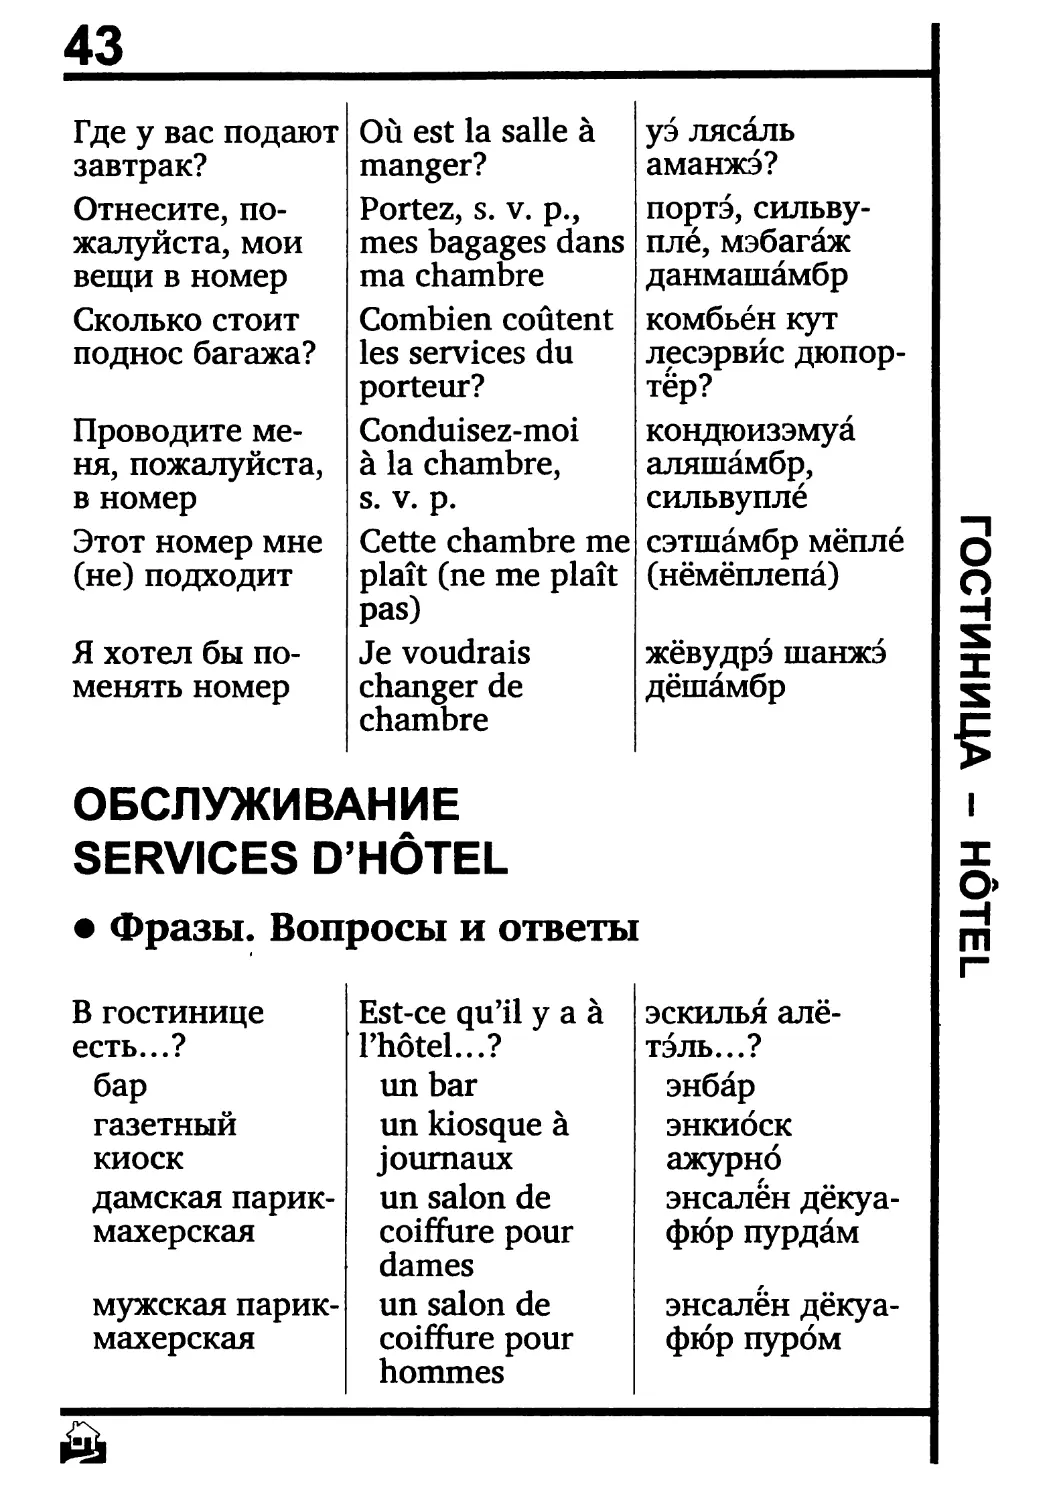 Обслуживание. Services d’hôtel